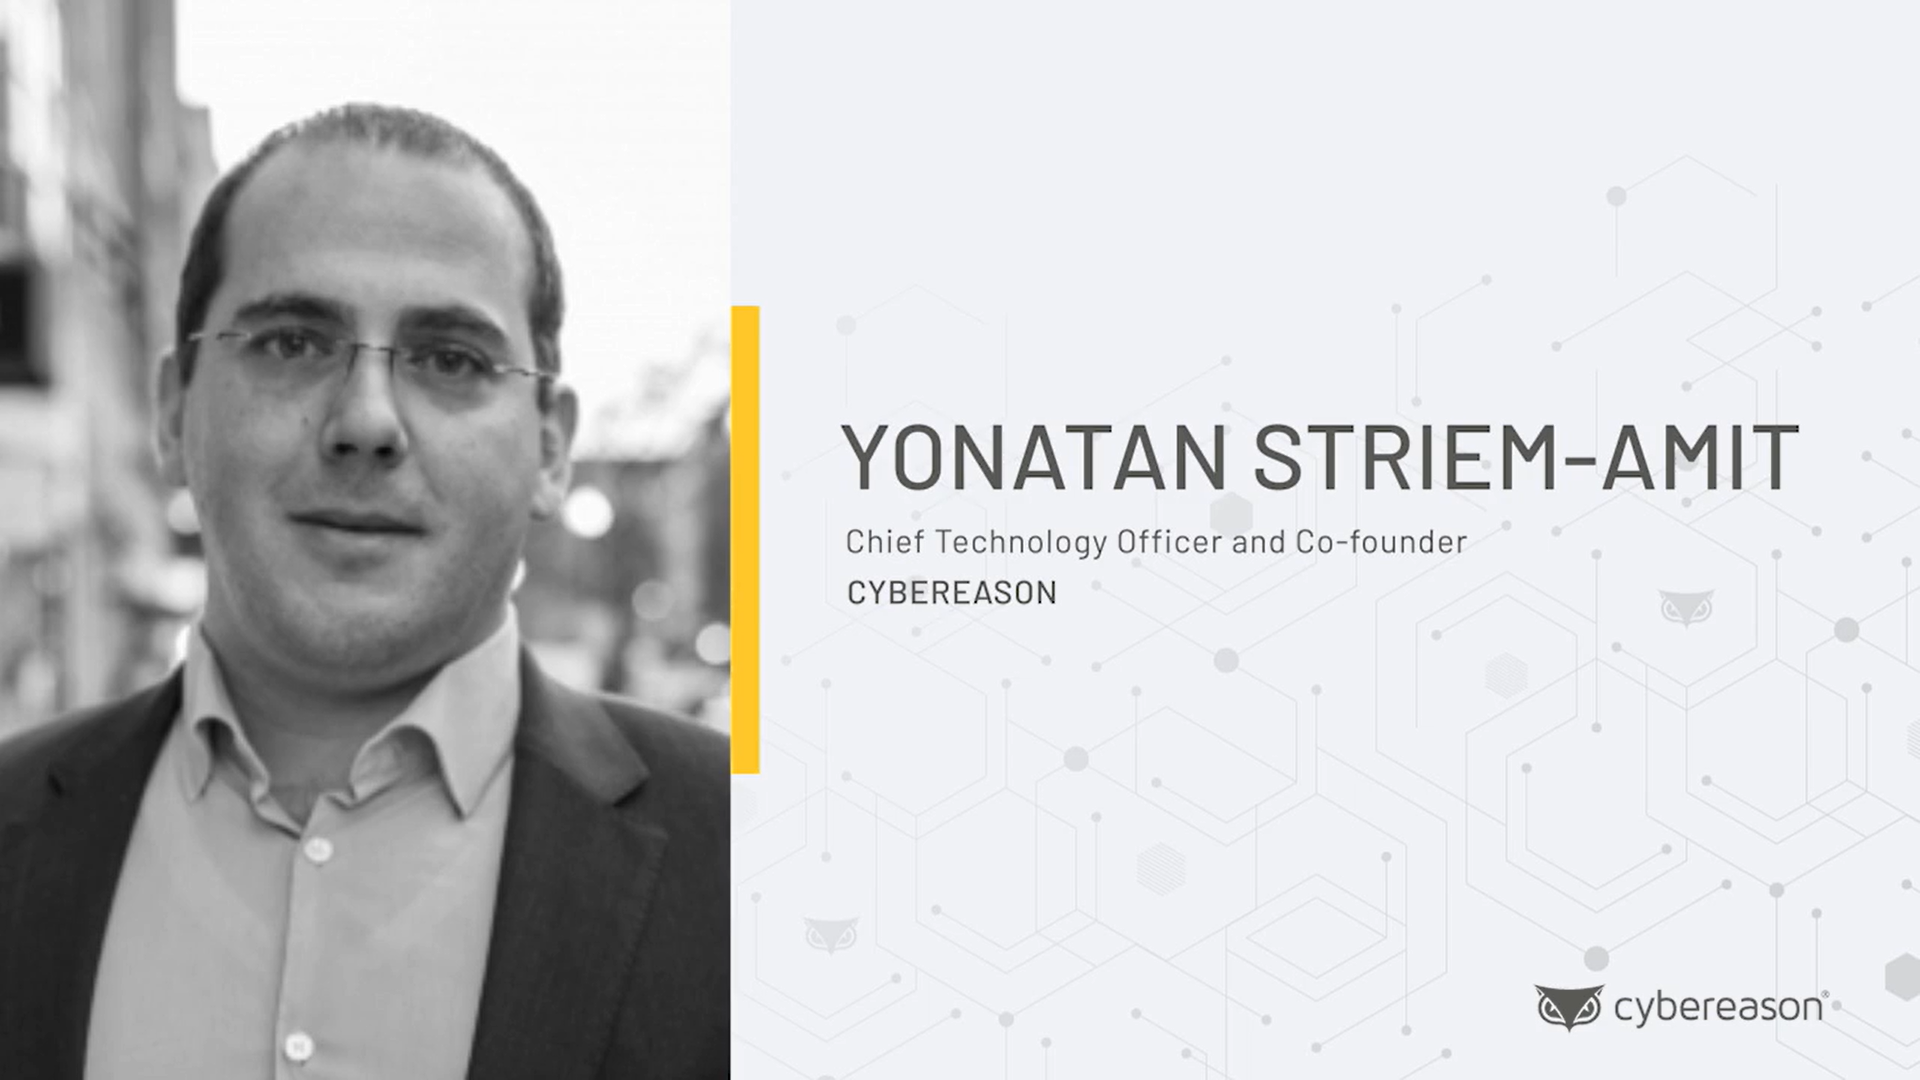 Ever Evolving: Yonatan Striem-Amit on Handling Breaches While Remote